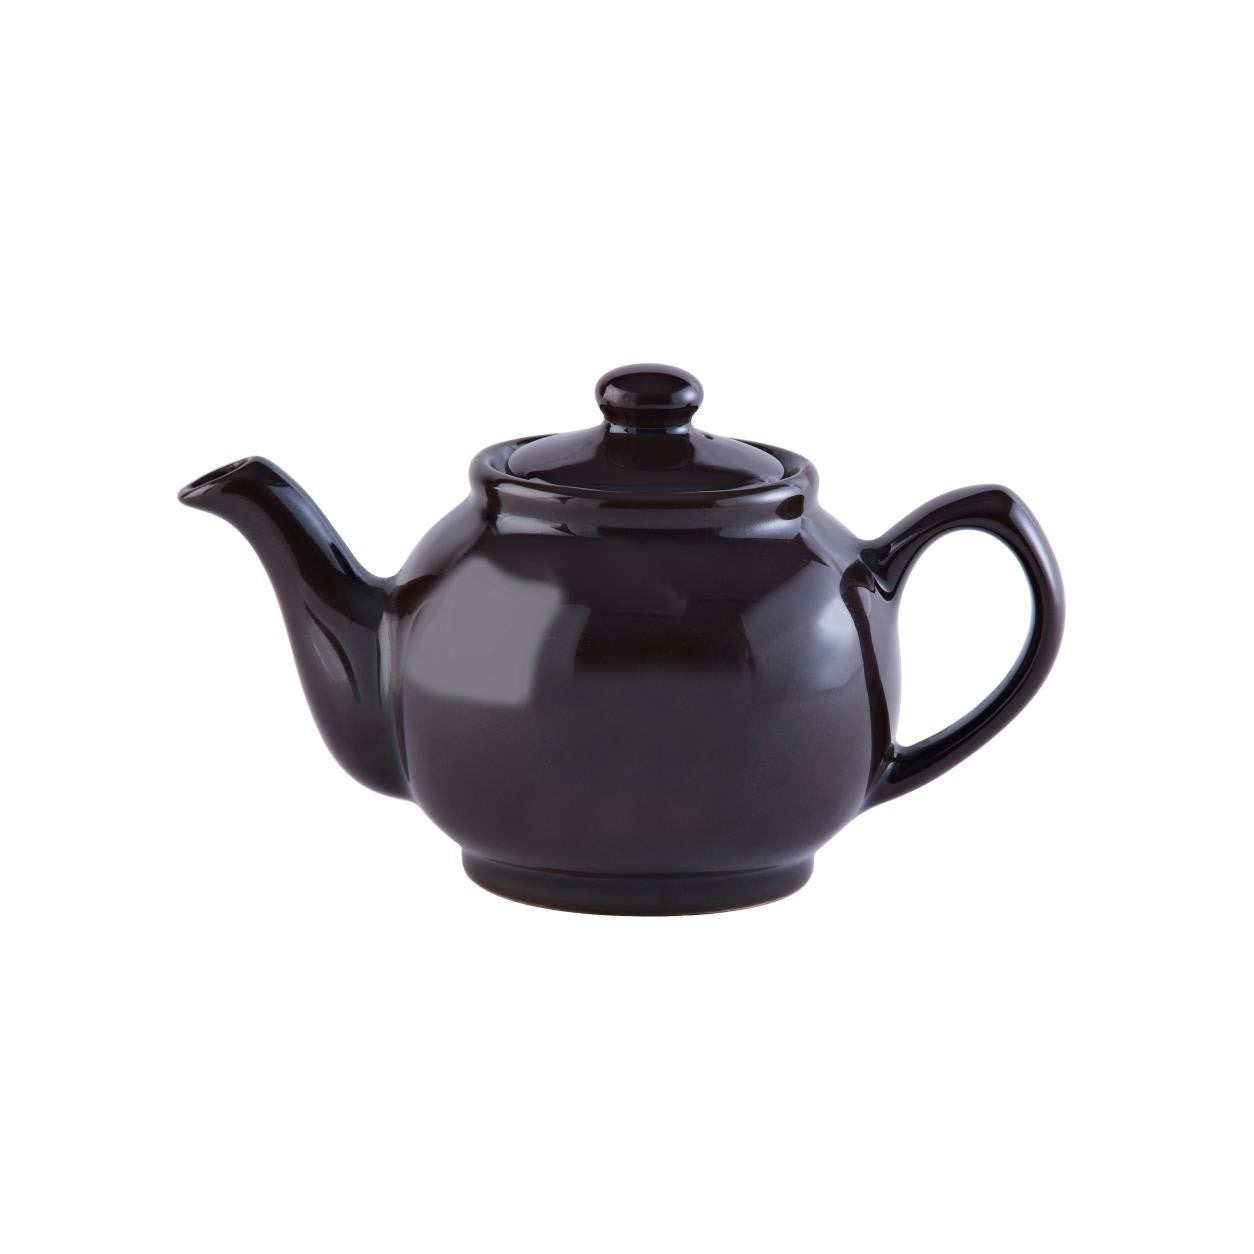 London Pottery Farmhouse Filter Teapot 2 Cup Rockingham Brown